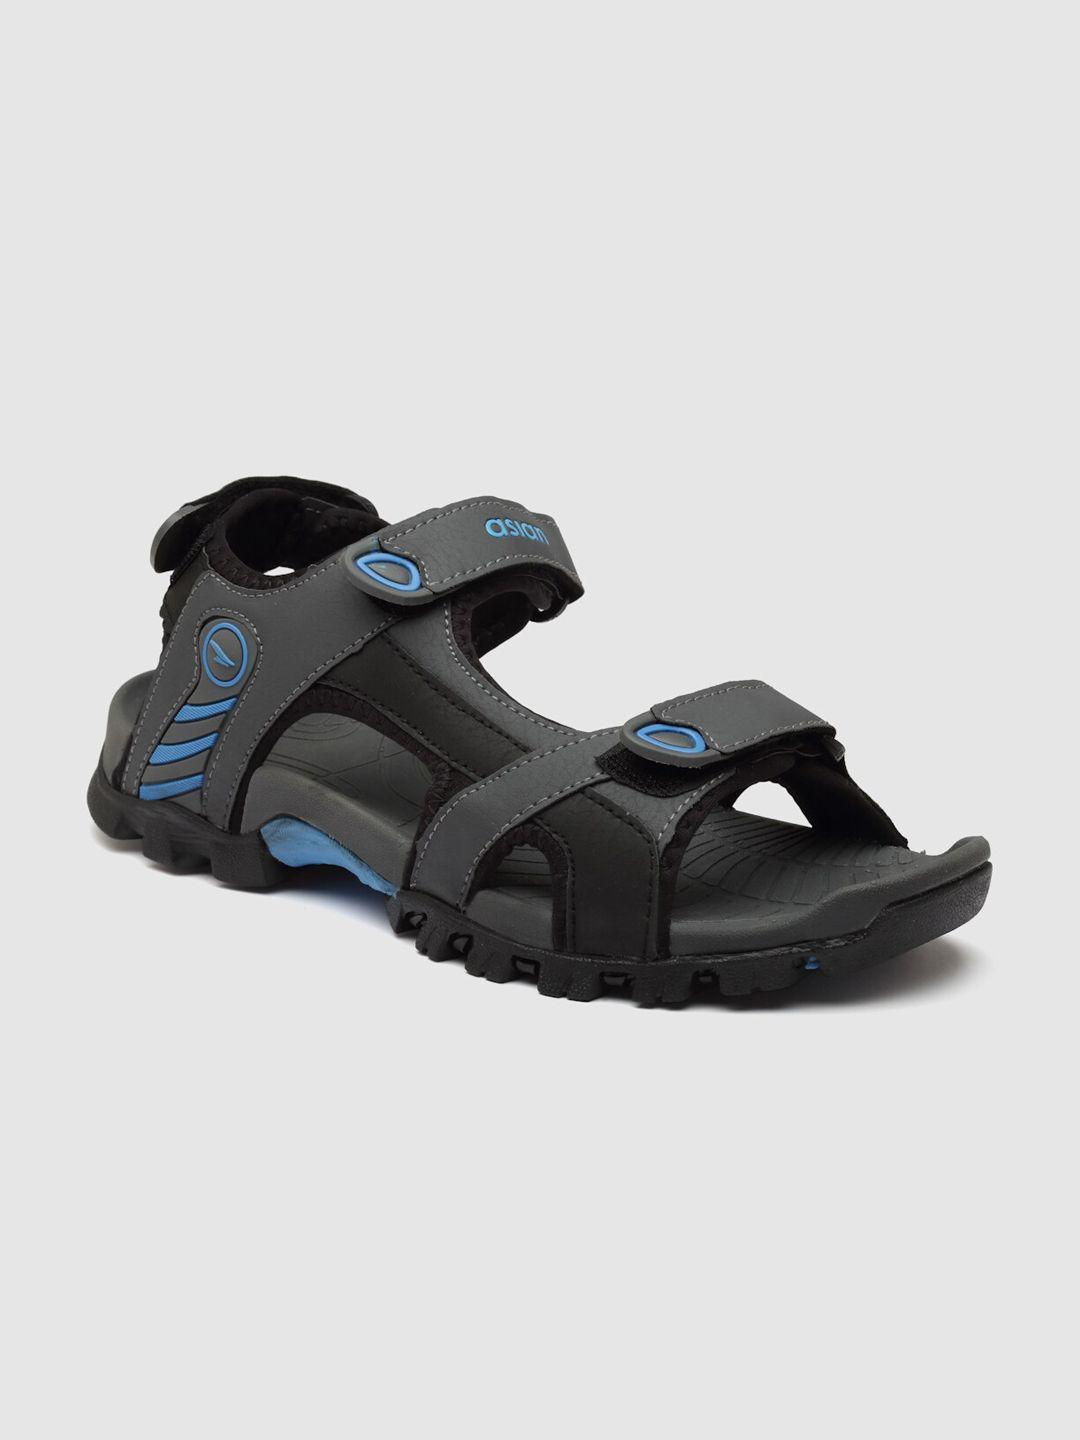 asian-men-vintage-02-running-sports-sandals